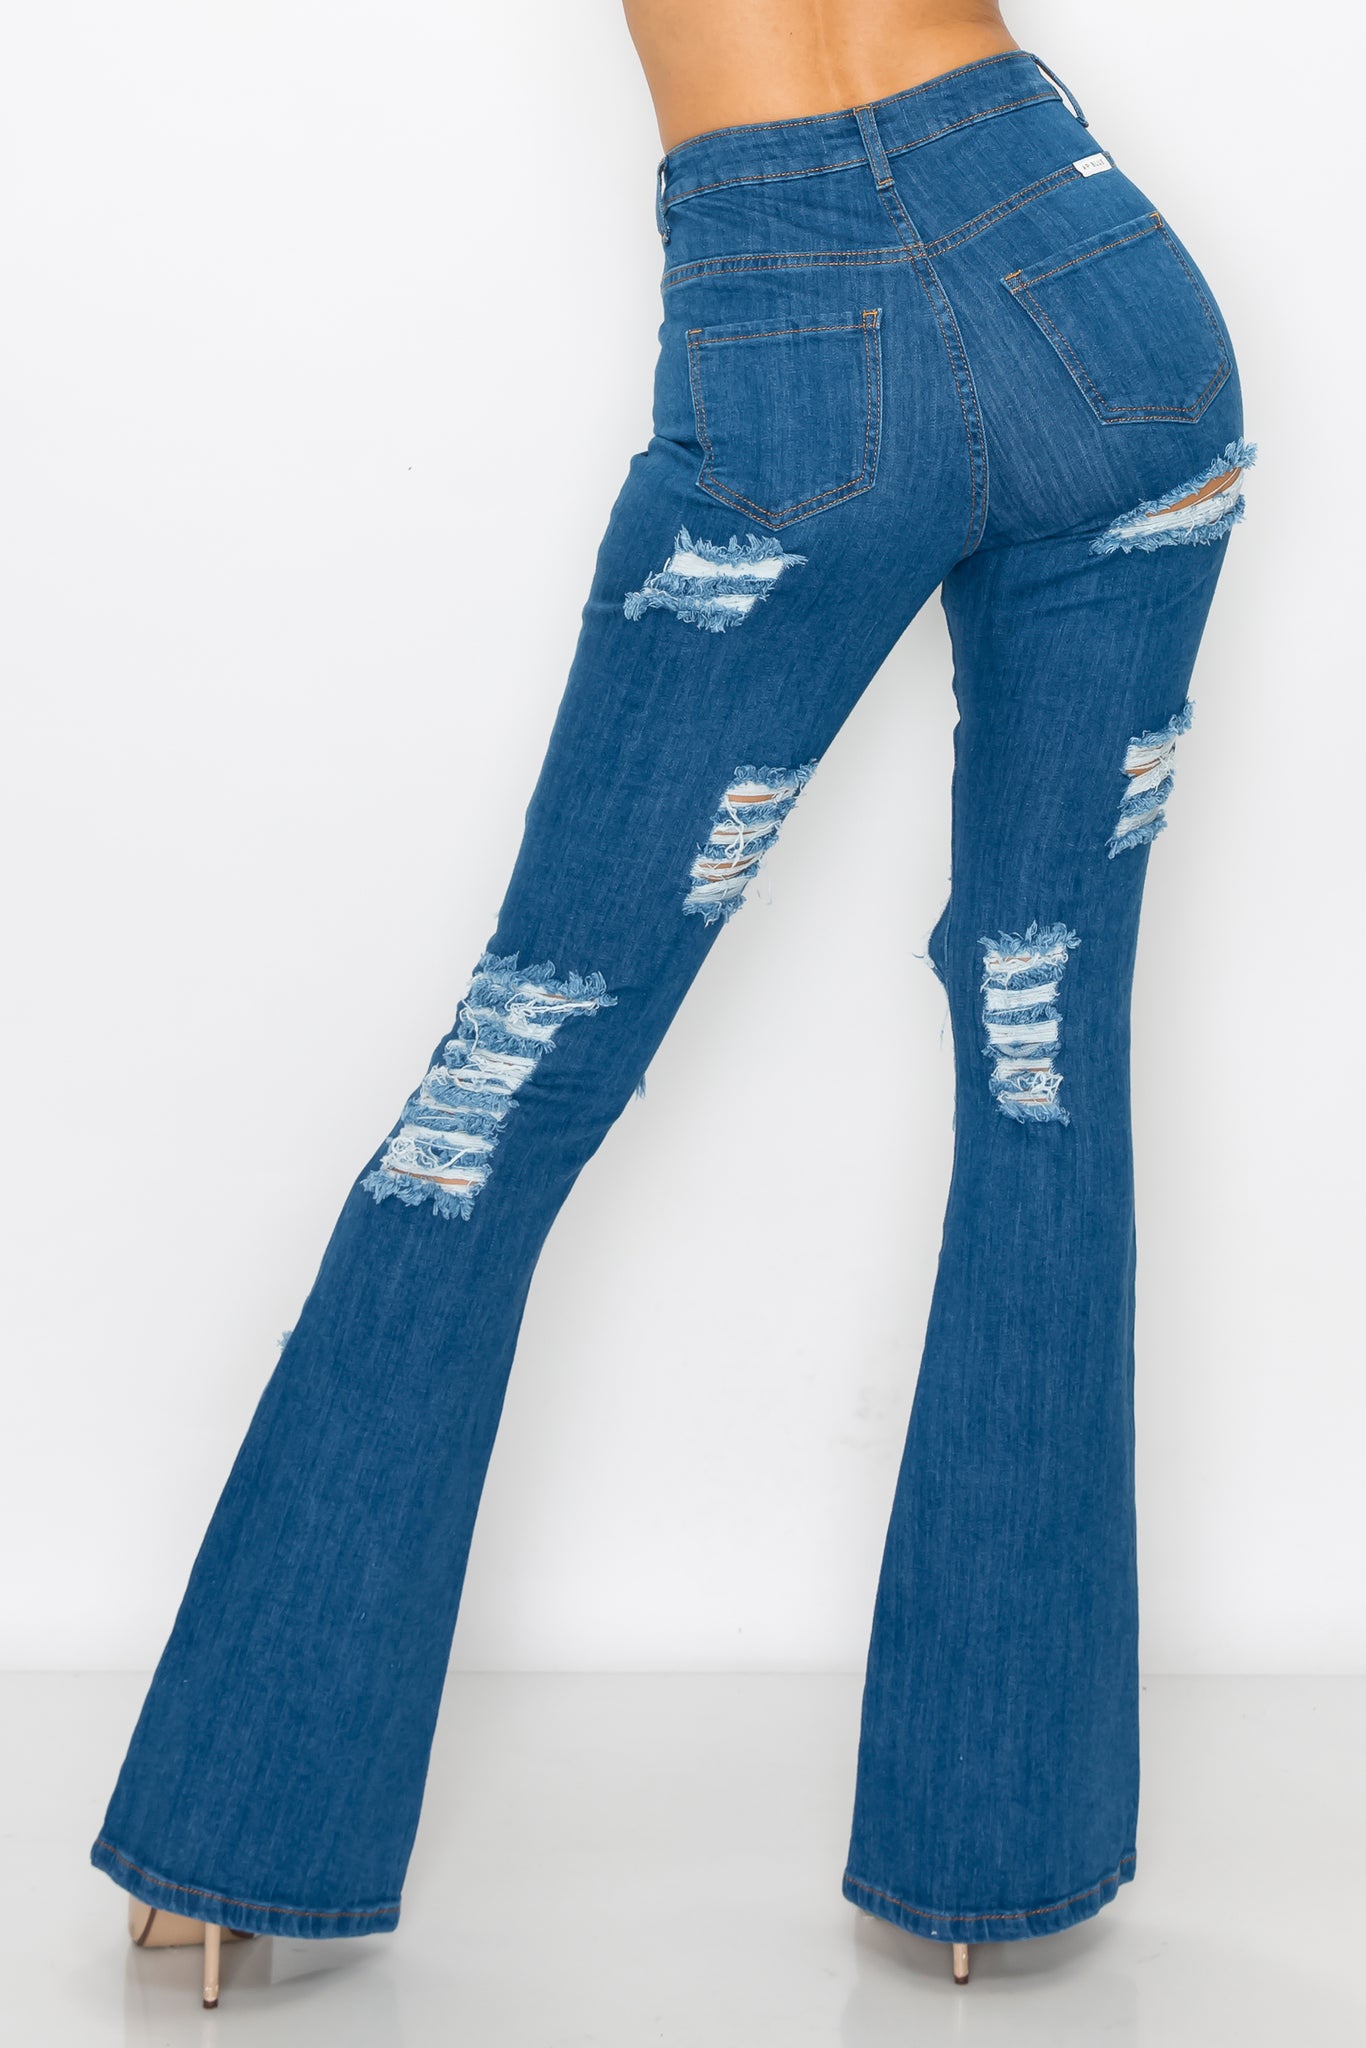 40227 Women's High Rise Ripped Flare Jean Denim Pants – Aphrodite Jeans